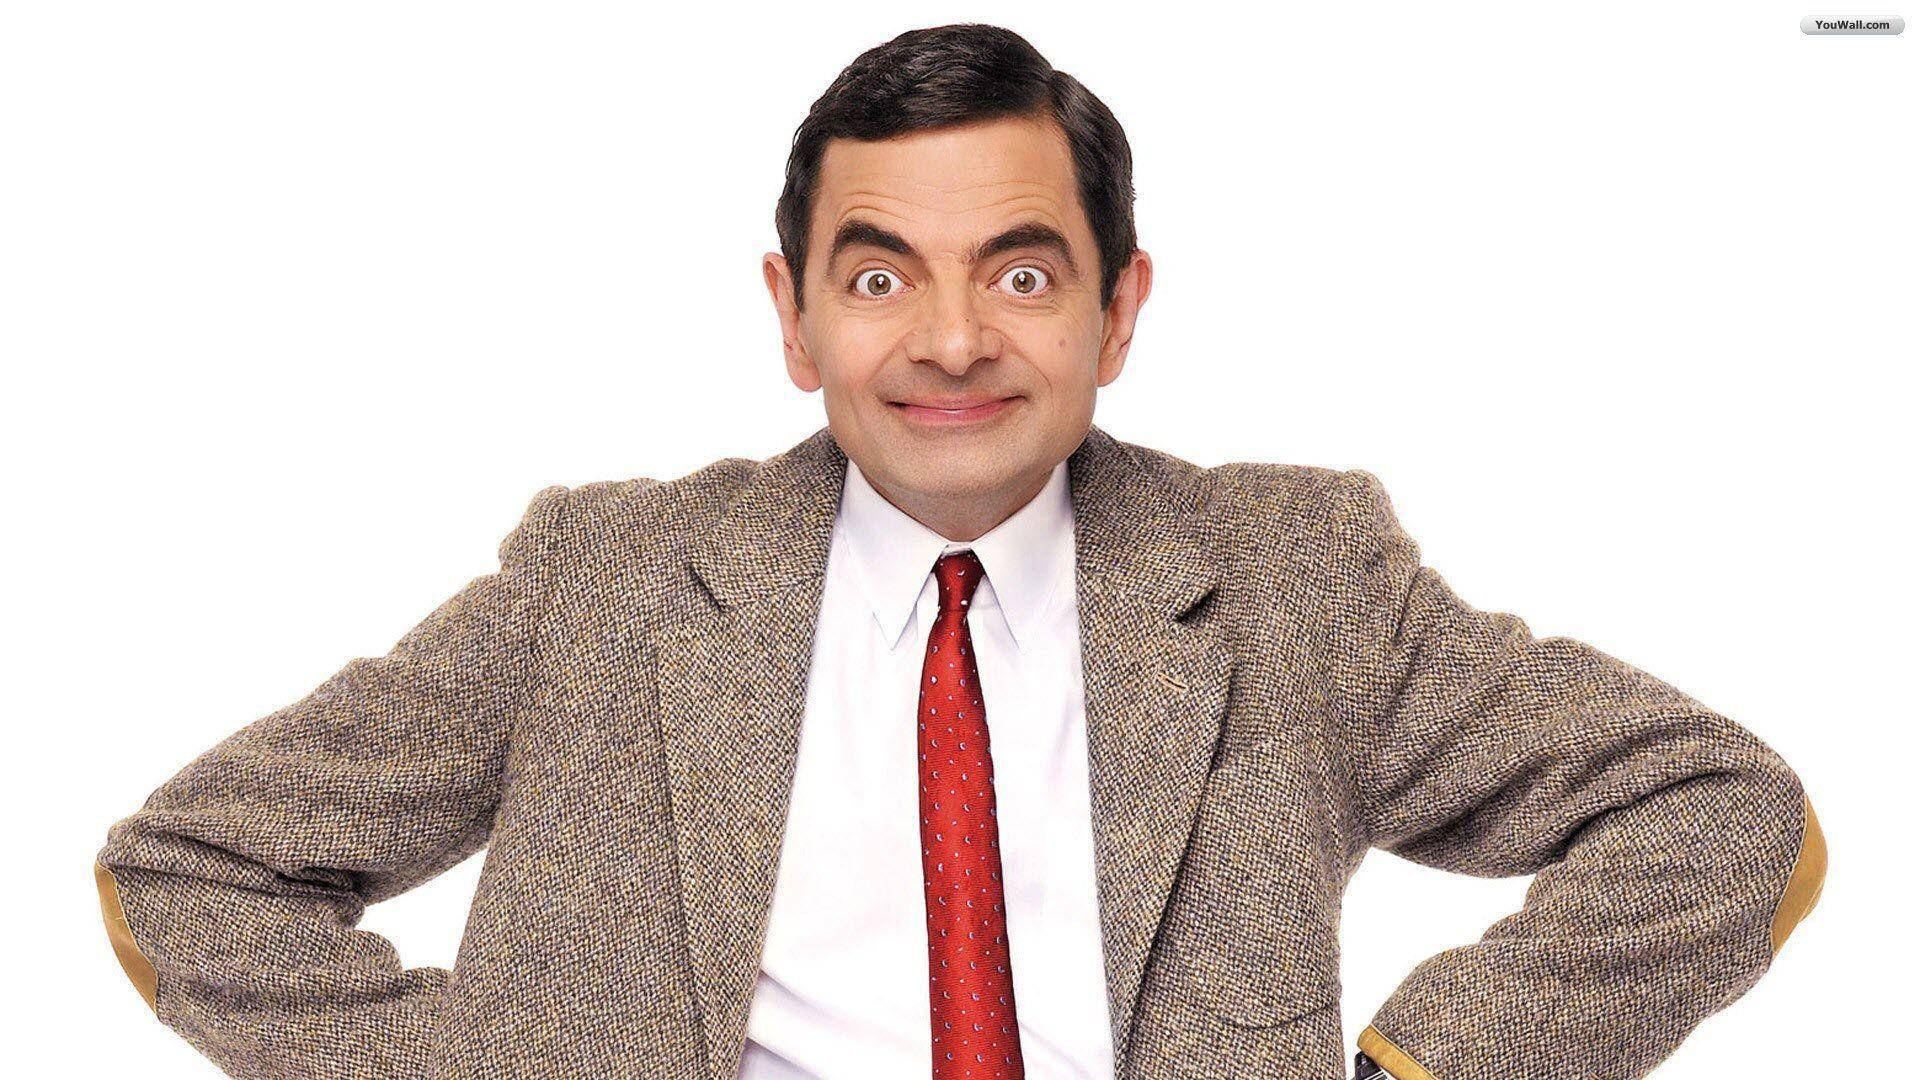 Mr. Bean Hip Pose Background